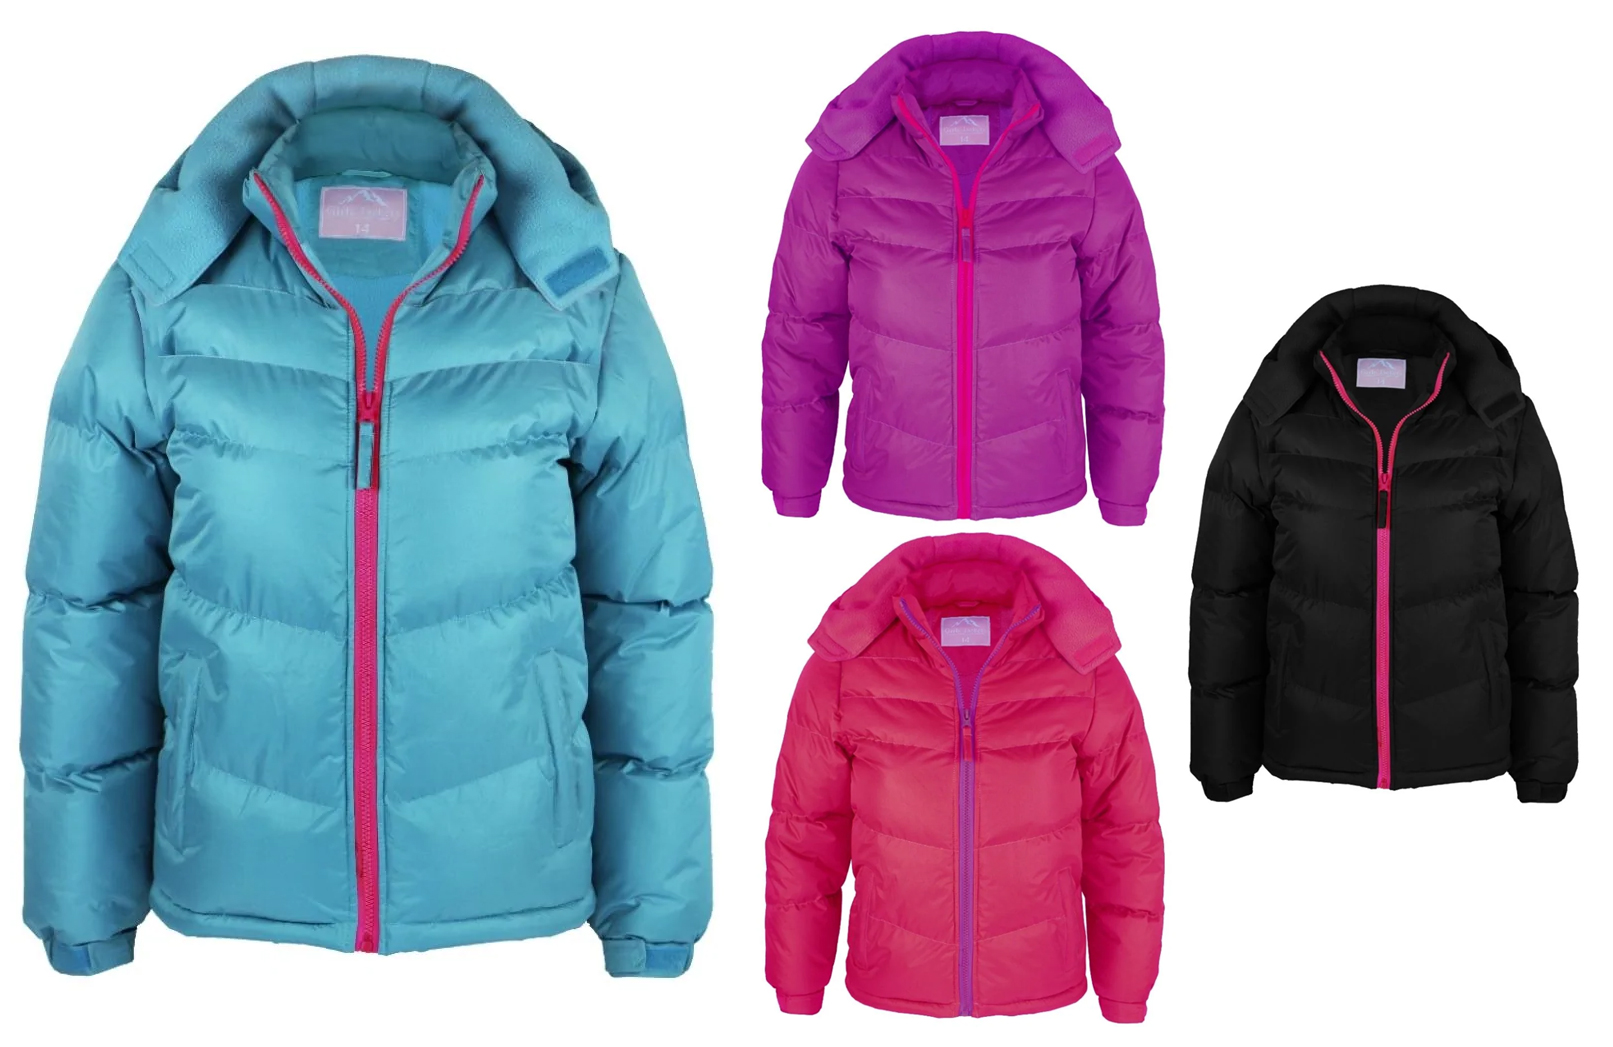 Little Girl's Insulated WINTER Puffer Jackets w/ Fleece Lining & Hood - Sizes 5-7